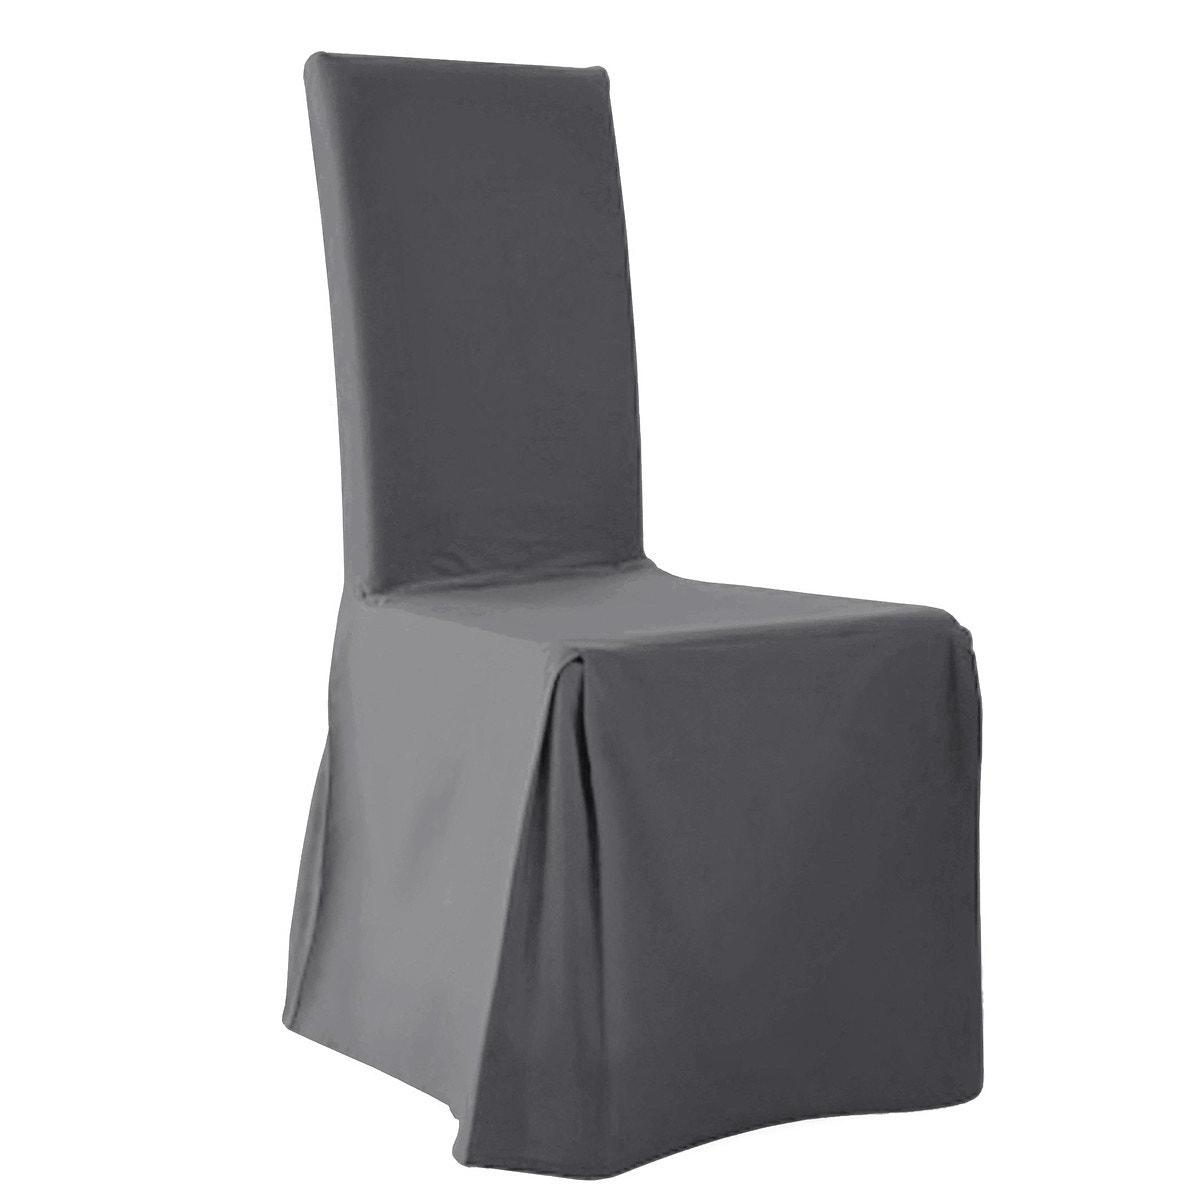 La Redoute for Business > Διακόσμηση > Ύφασμα, διακόσμηση > Καλύμματα επίπλων Κάλυμμα καρέκλας (σετ των 2) Μ37xΠ40xΥ55cm